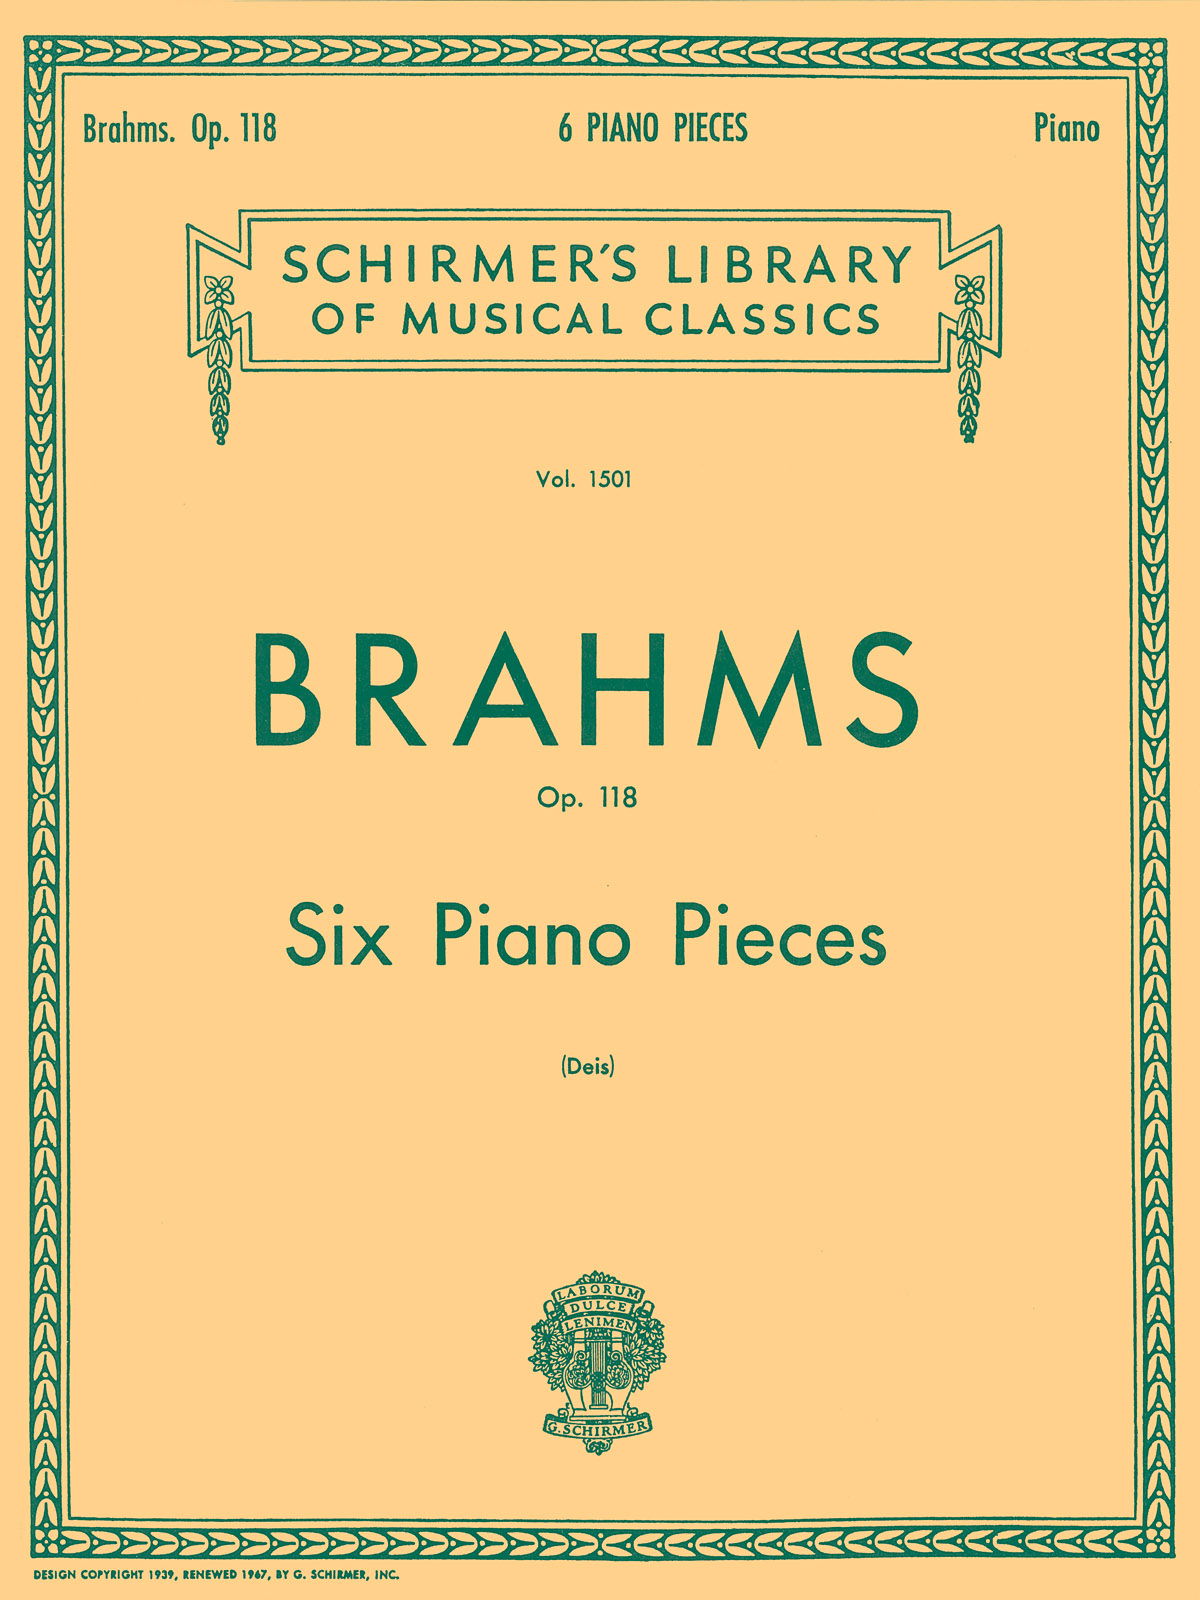 Brahms: Six Piano Pieces, Op. 118